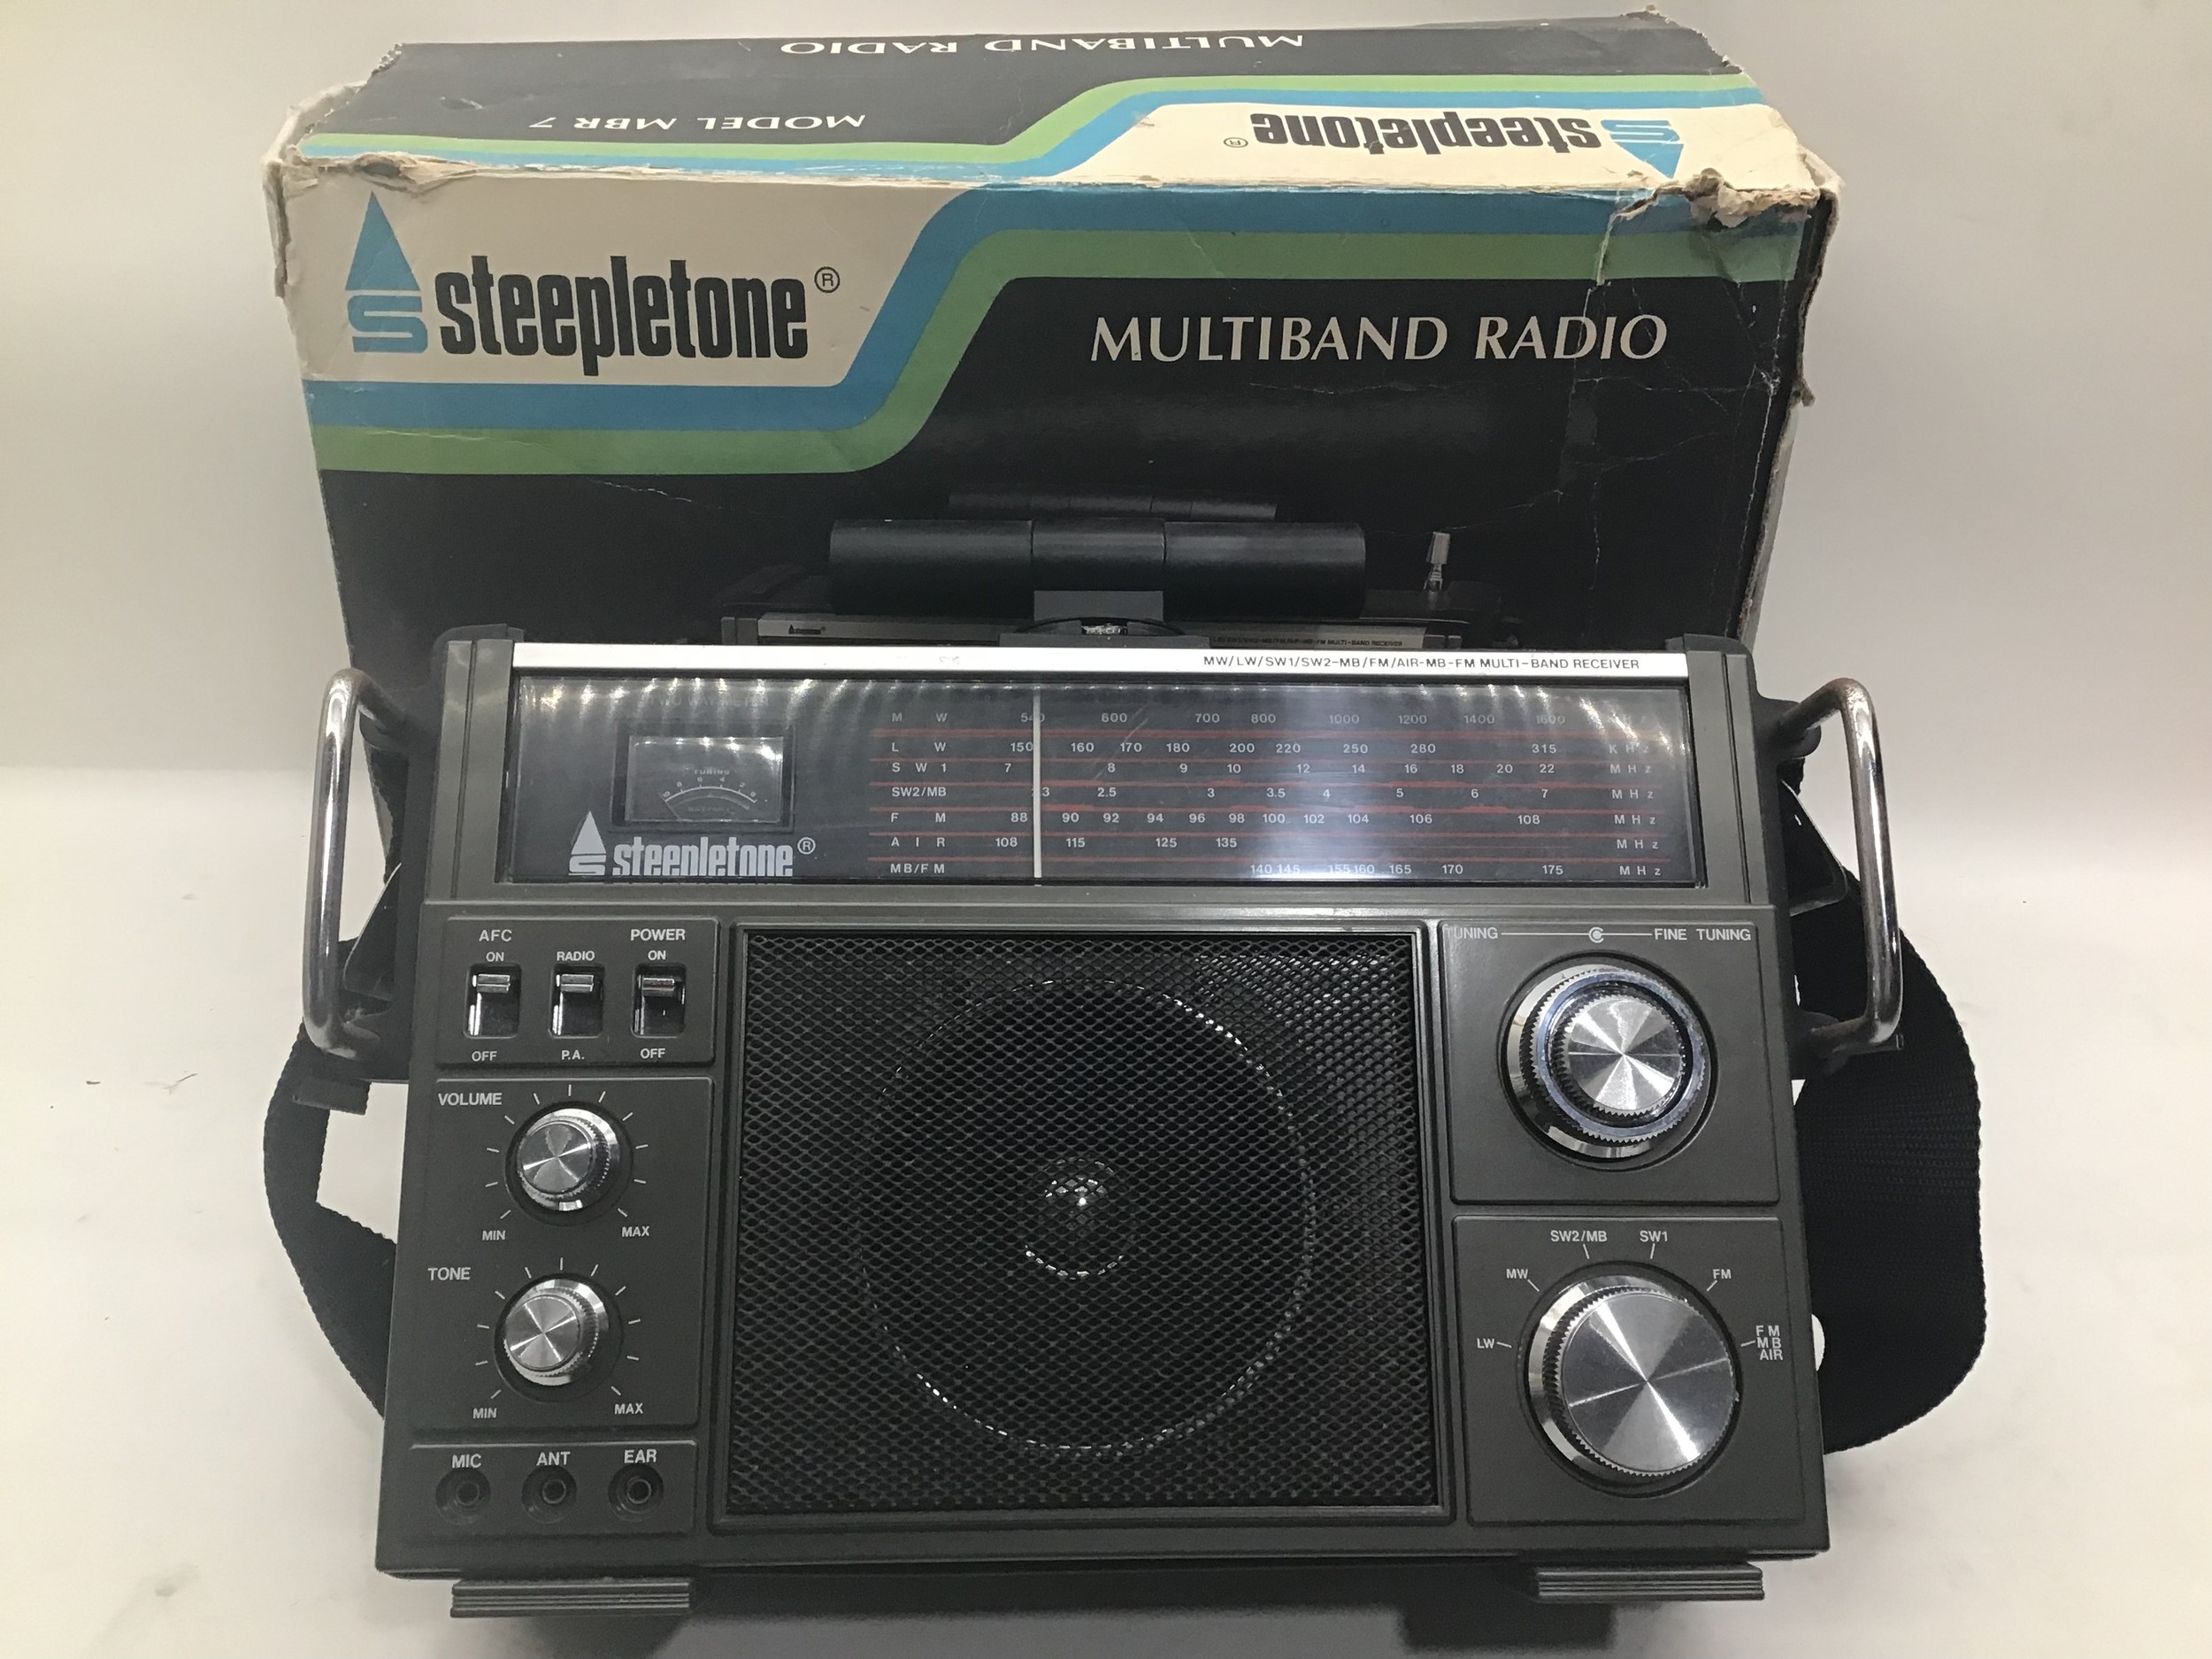 STEEPLETONE MULTIBAND RADIO. Model MBR7 with LW MW SW FM AM AIR Table Top Radio / Receiver